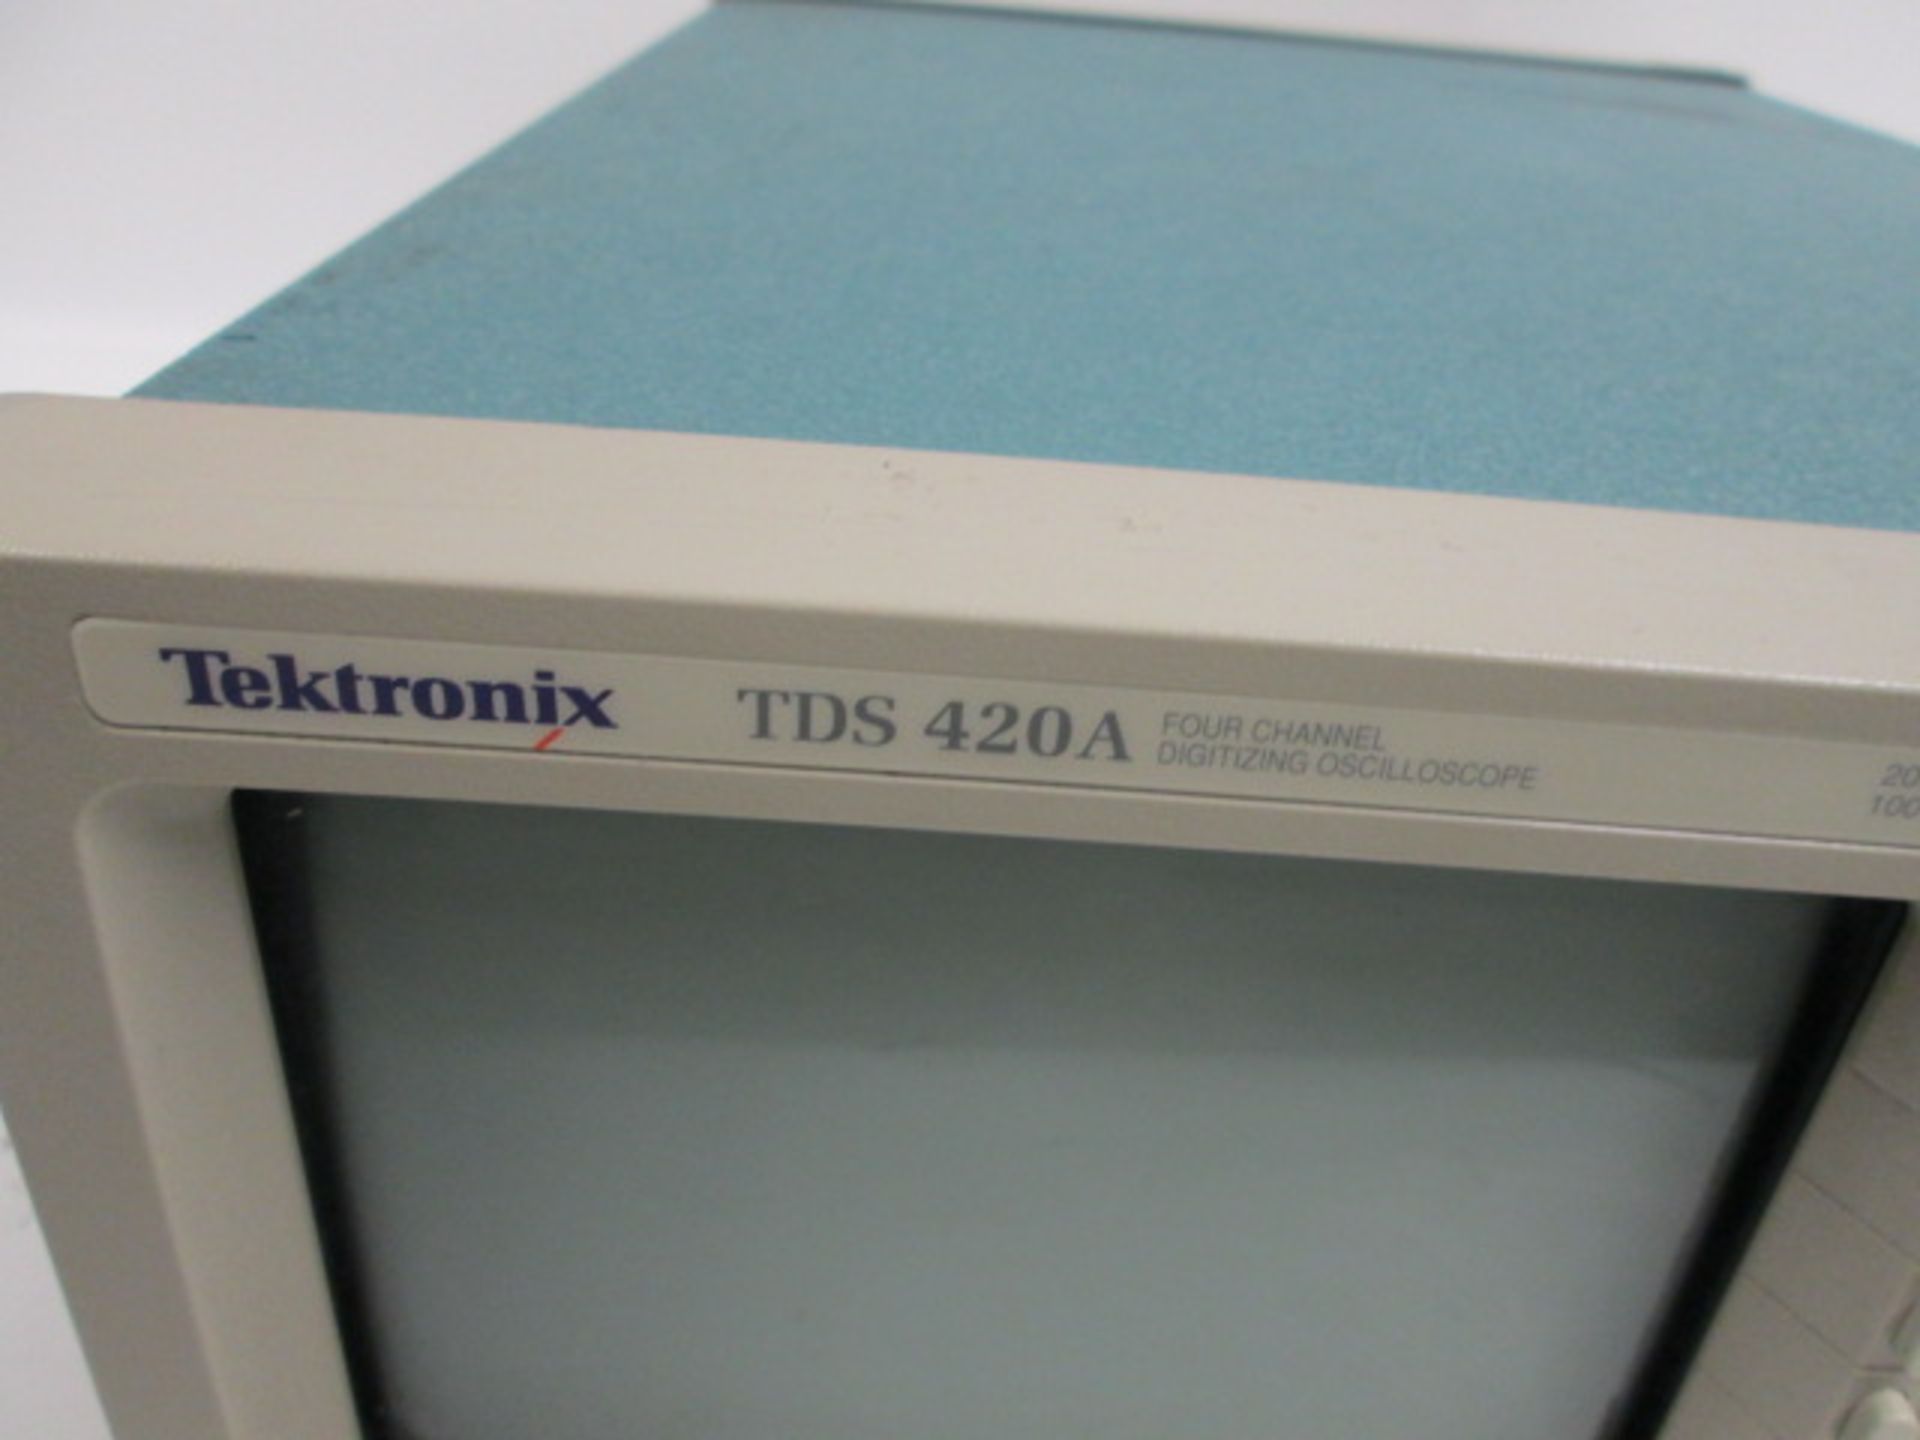 TEKTRONIX TDS 420A FOUR CHANNEL DIGITIZING OSCILLOSCOPE - Image 4 of 4